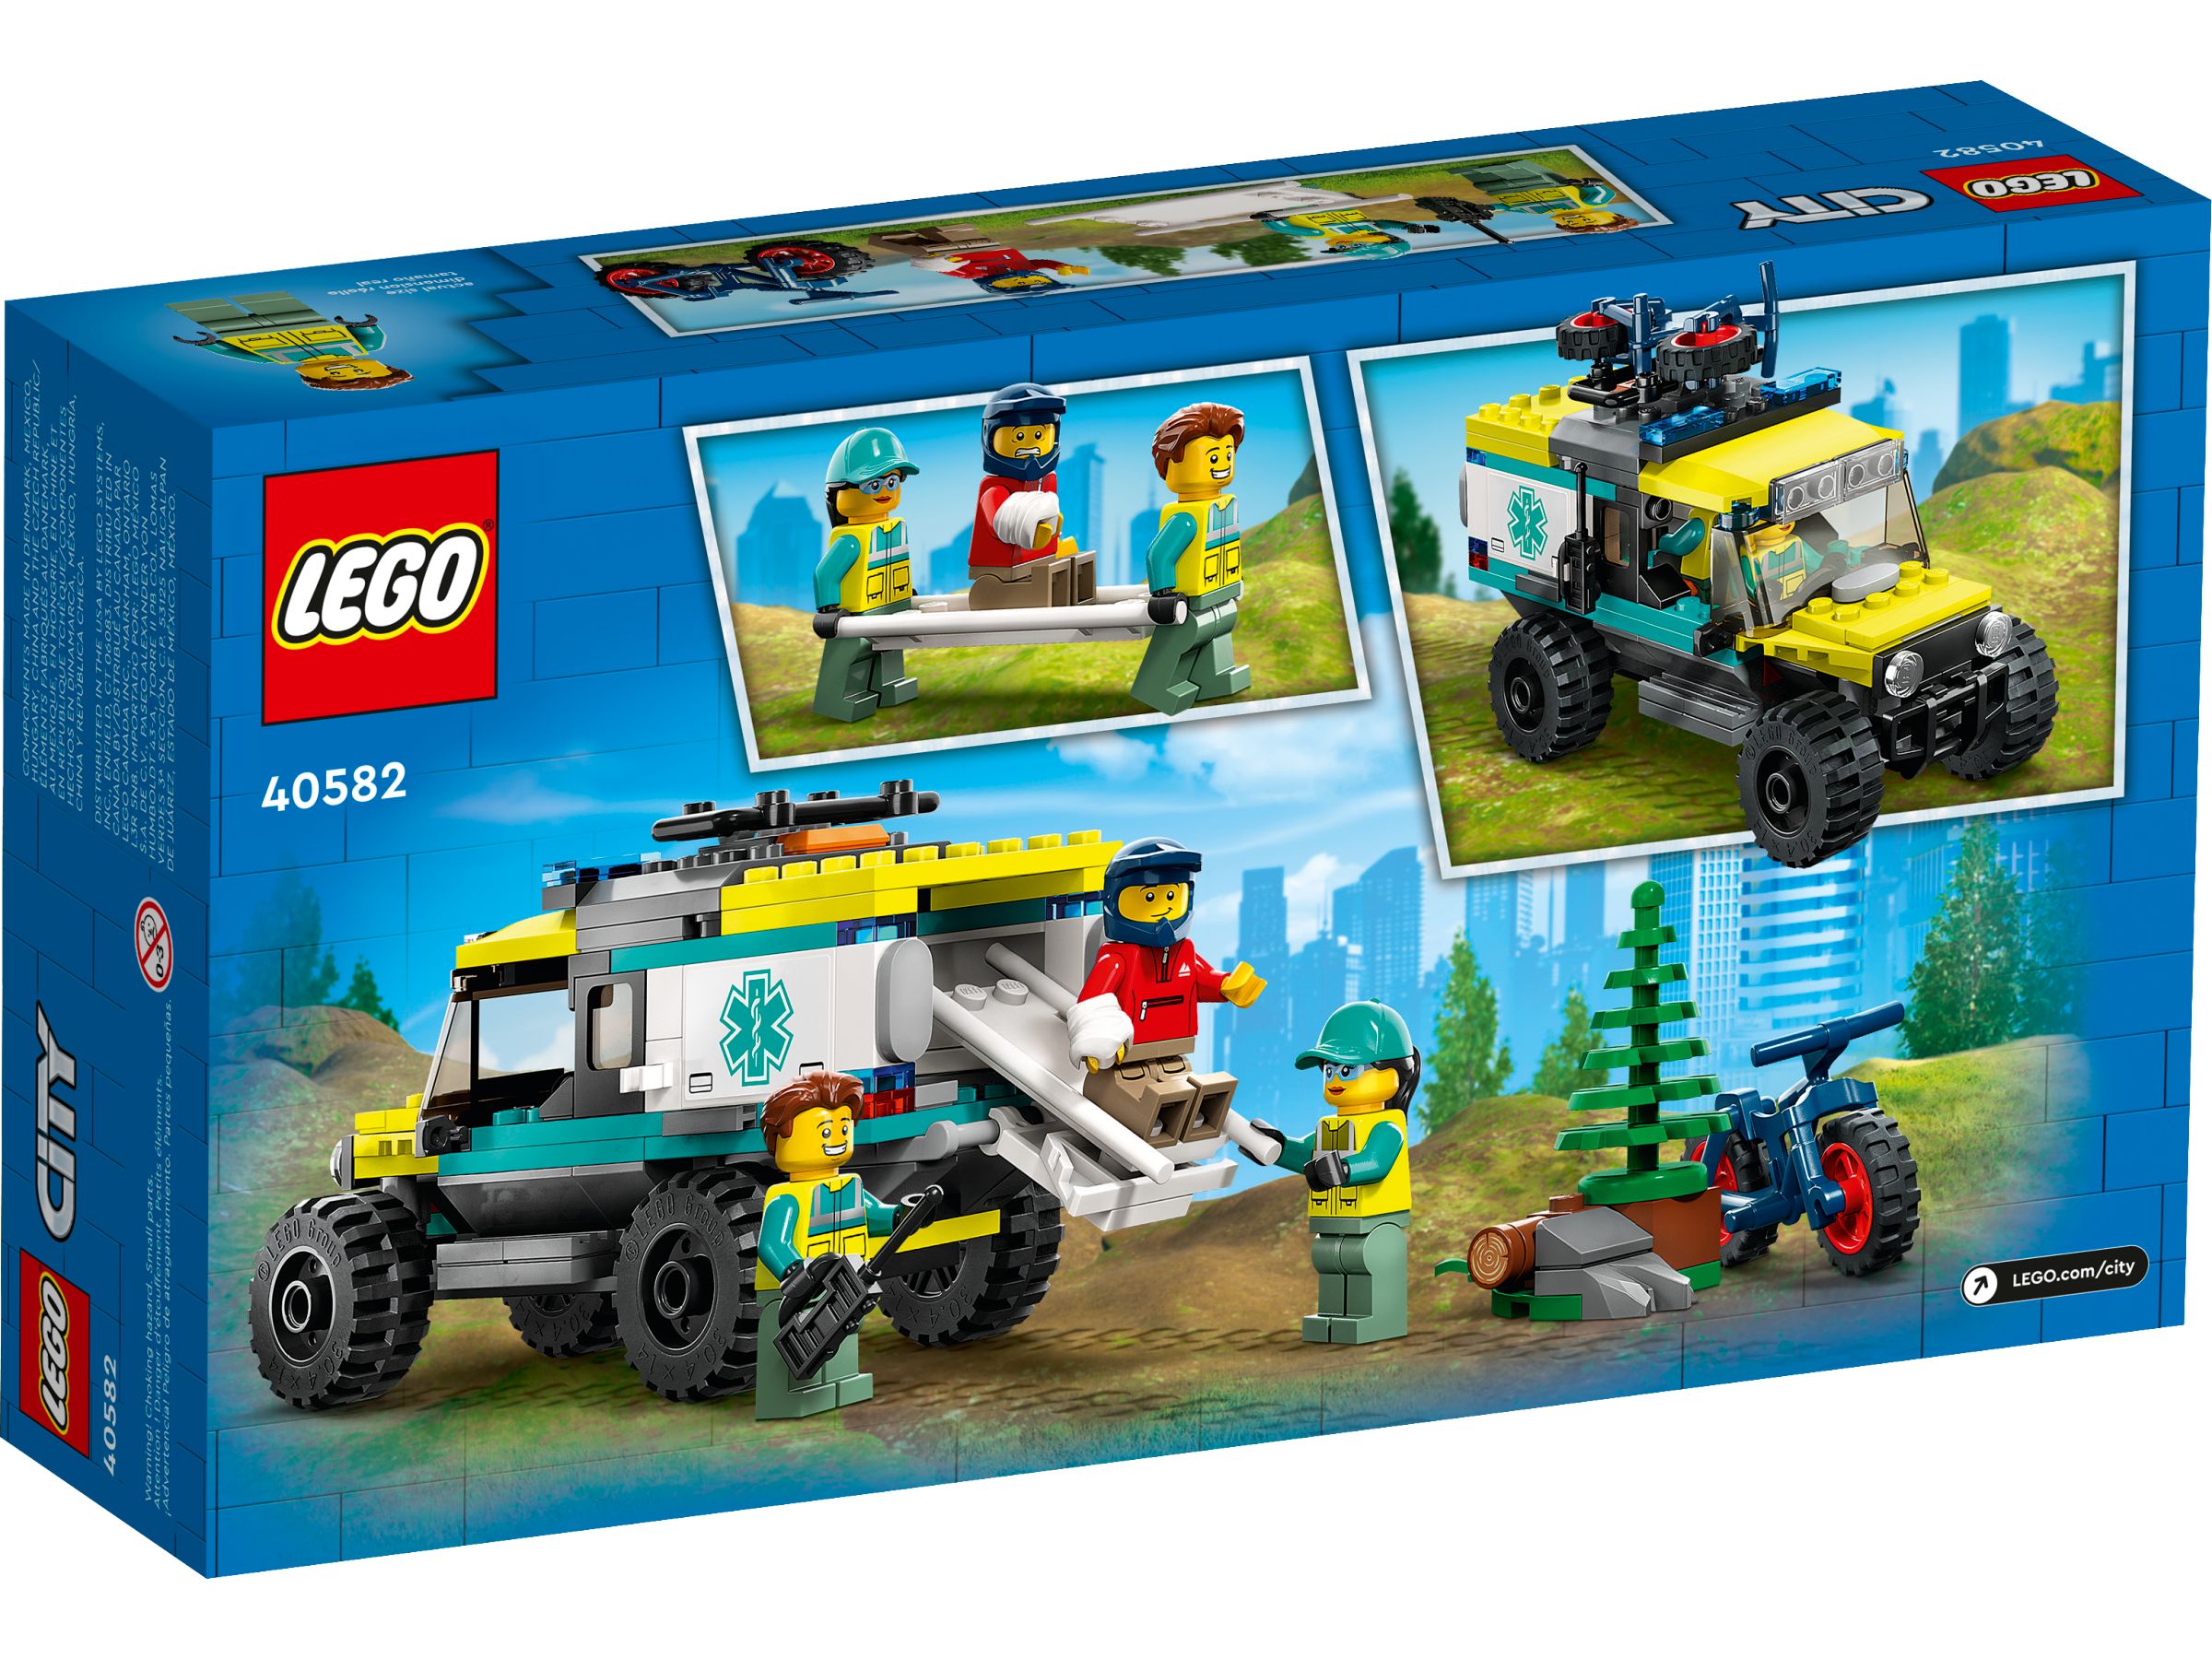 LEGO City 40582 Allrad-Rettungswagen LEGO_40582_alt2.jpg